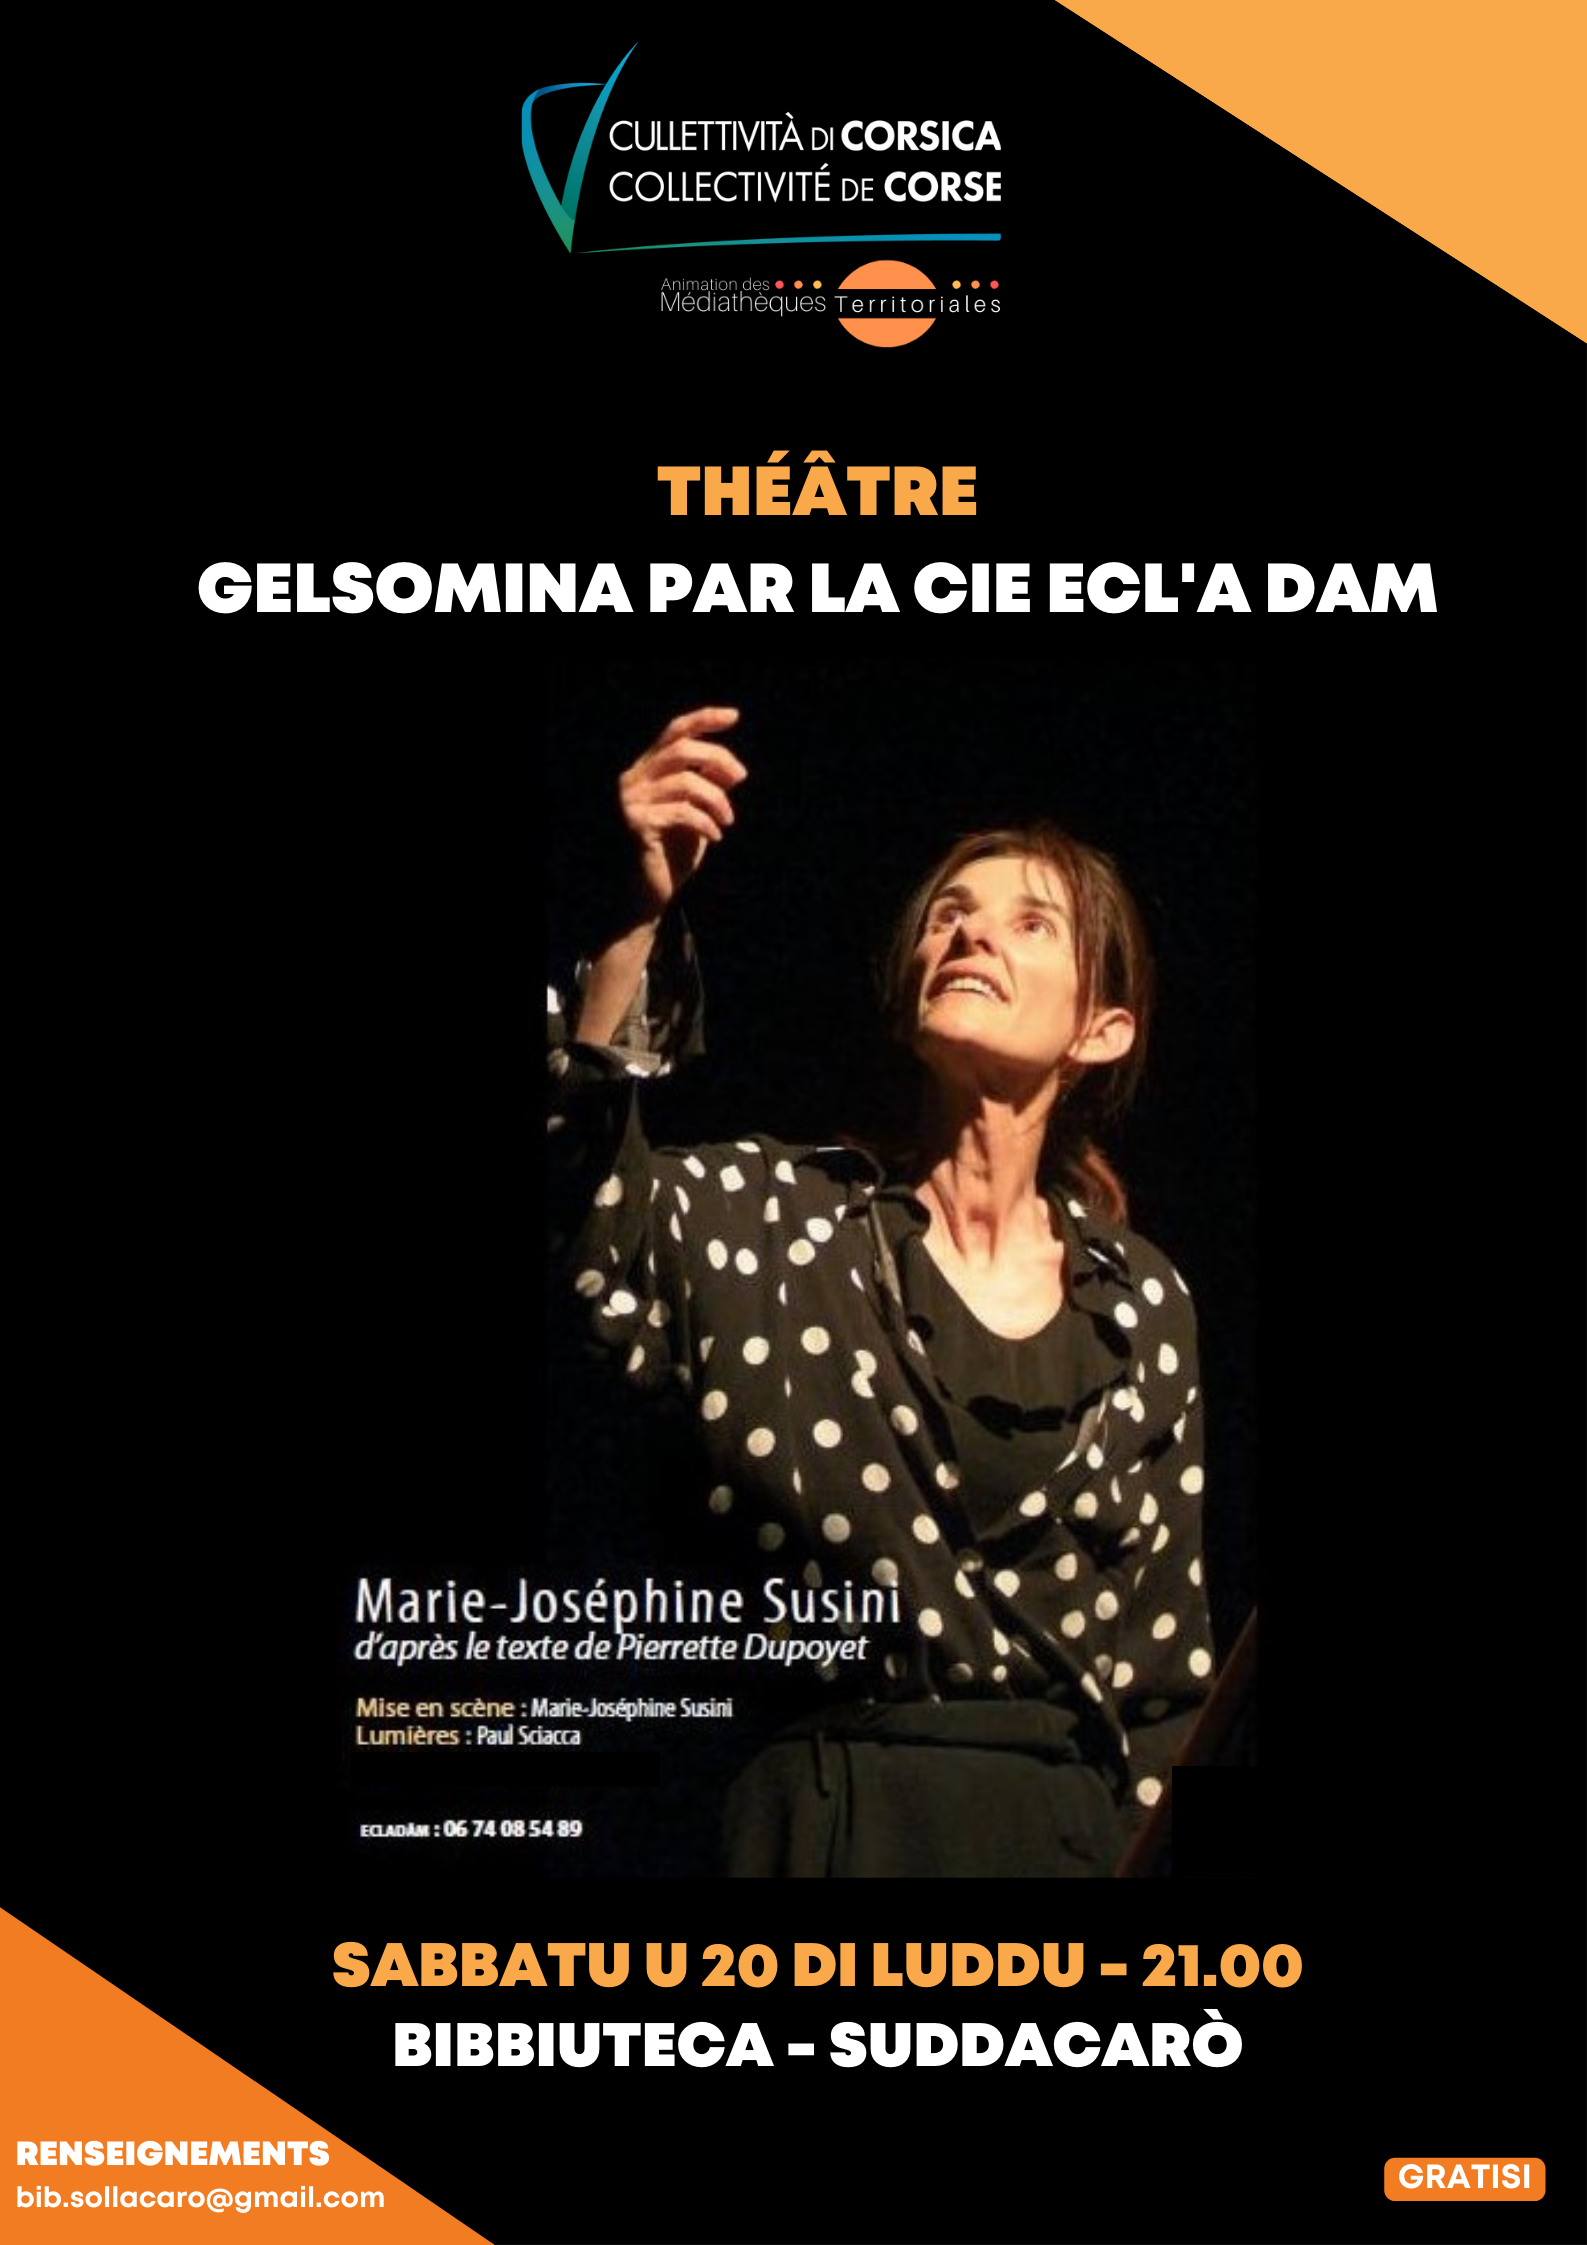 Théâtre "Gelsomina", Mise en scène et interprétation de Marie-Joséphine Susini - Bibbiuteca - Suddacarò